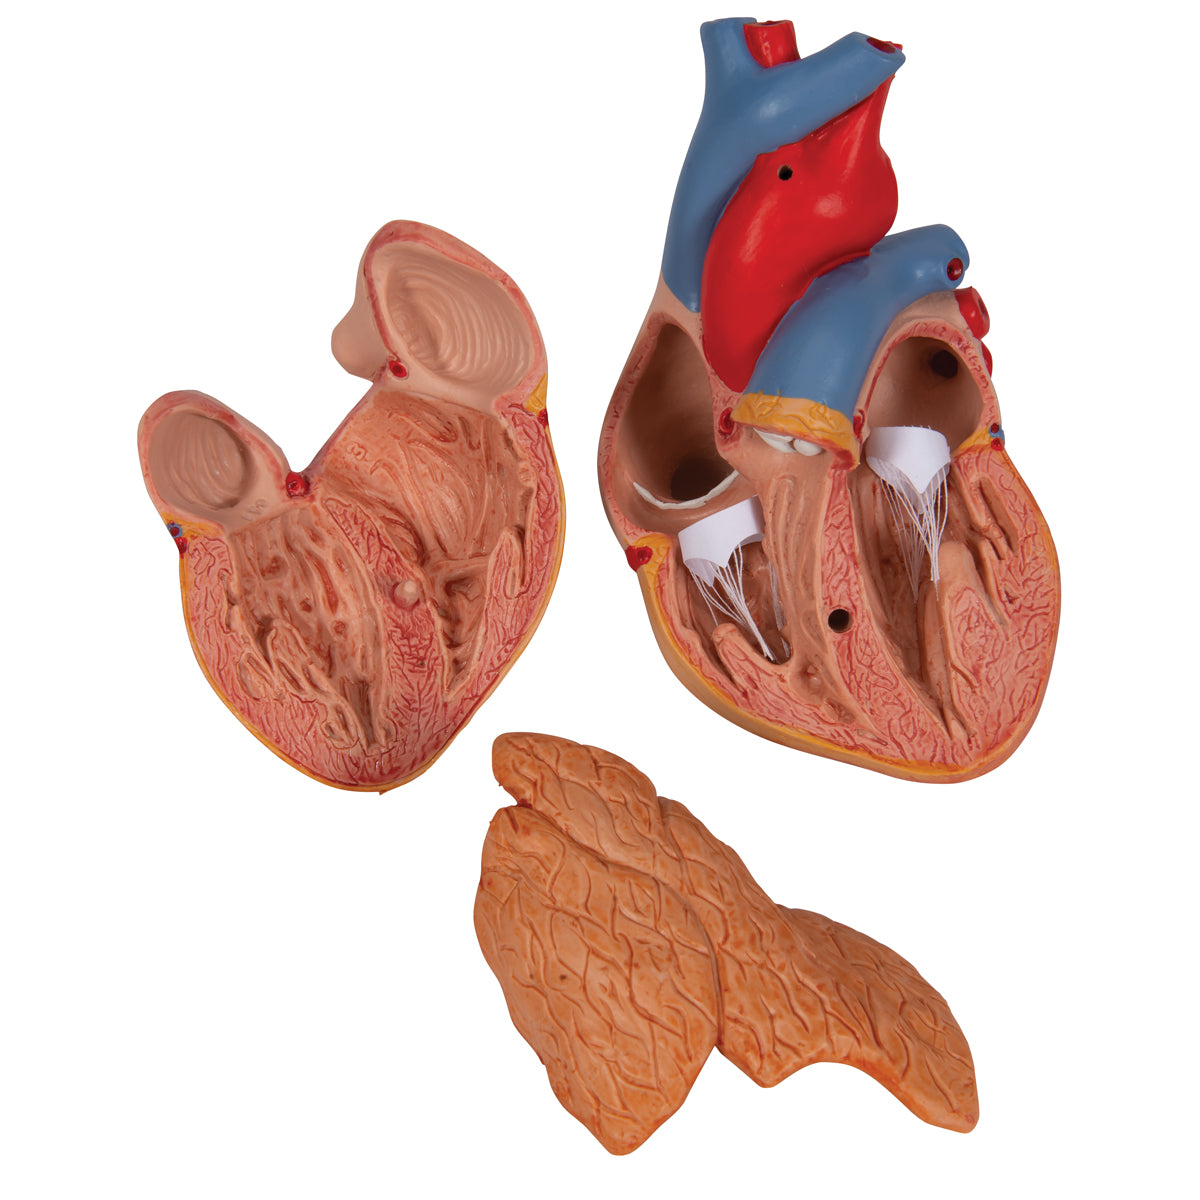 Reducerad hjärtmodell inklusive tymus